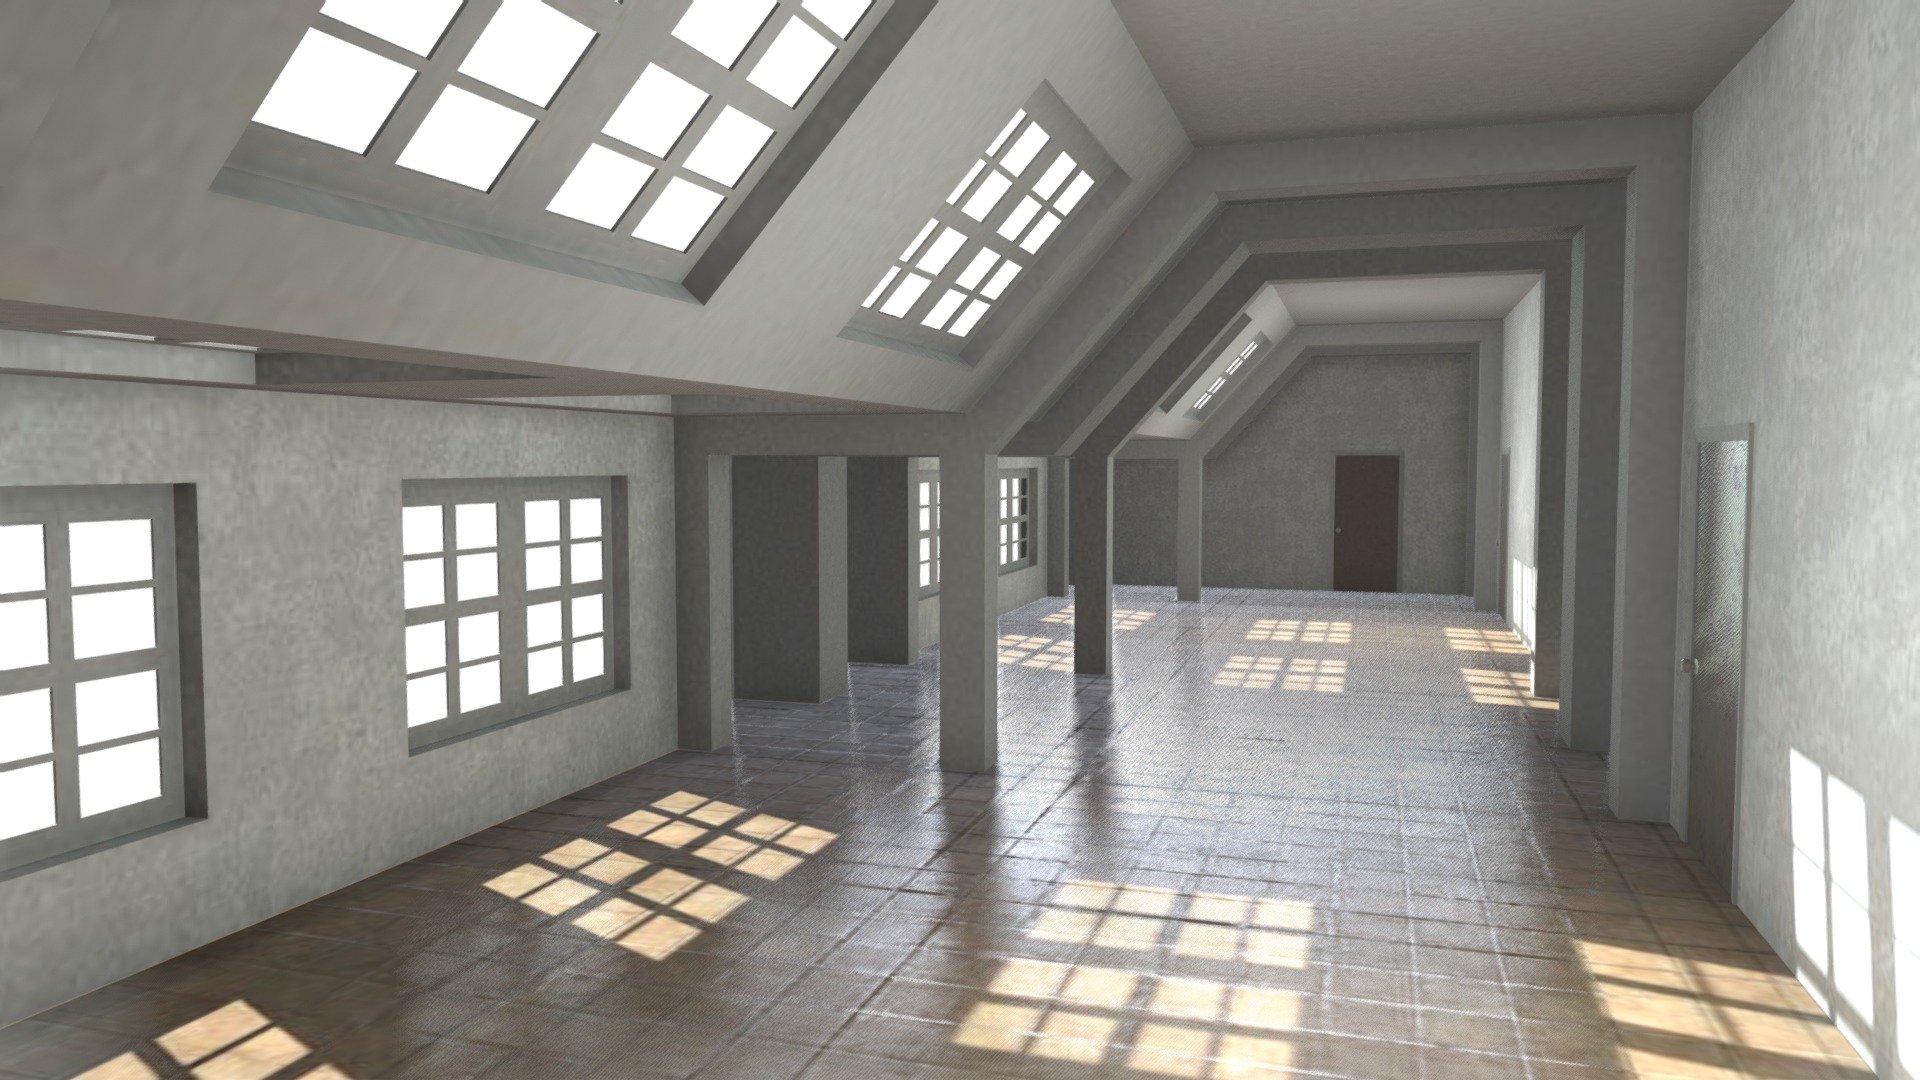 VR Sunroom Hallway
with baked lighting / textures - VR Sunroom Hallway - Download Free 3D model by jimbogies 3d model